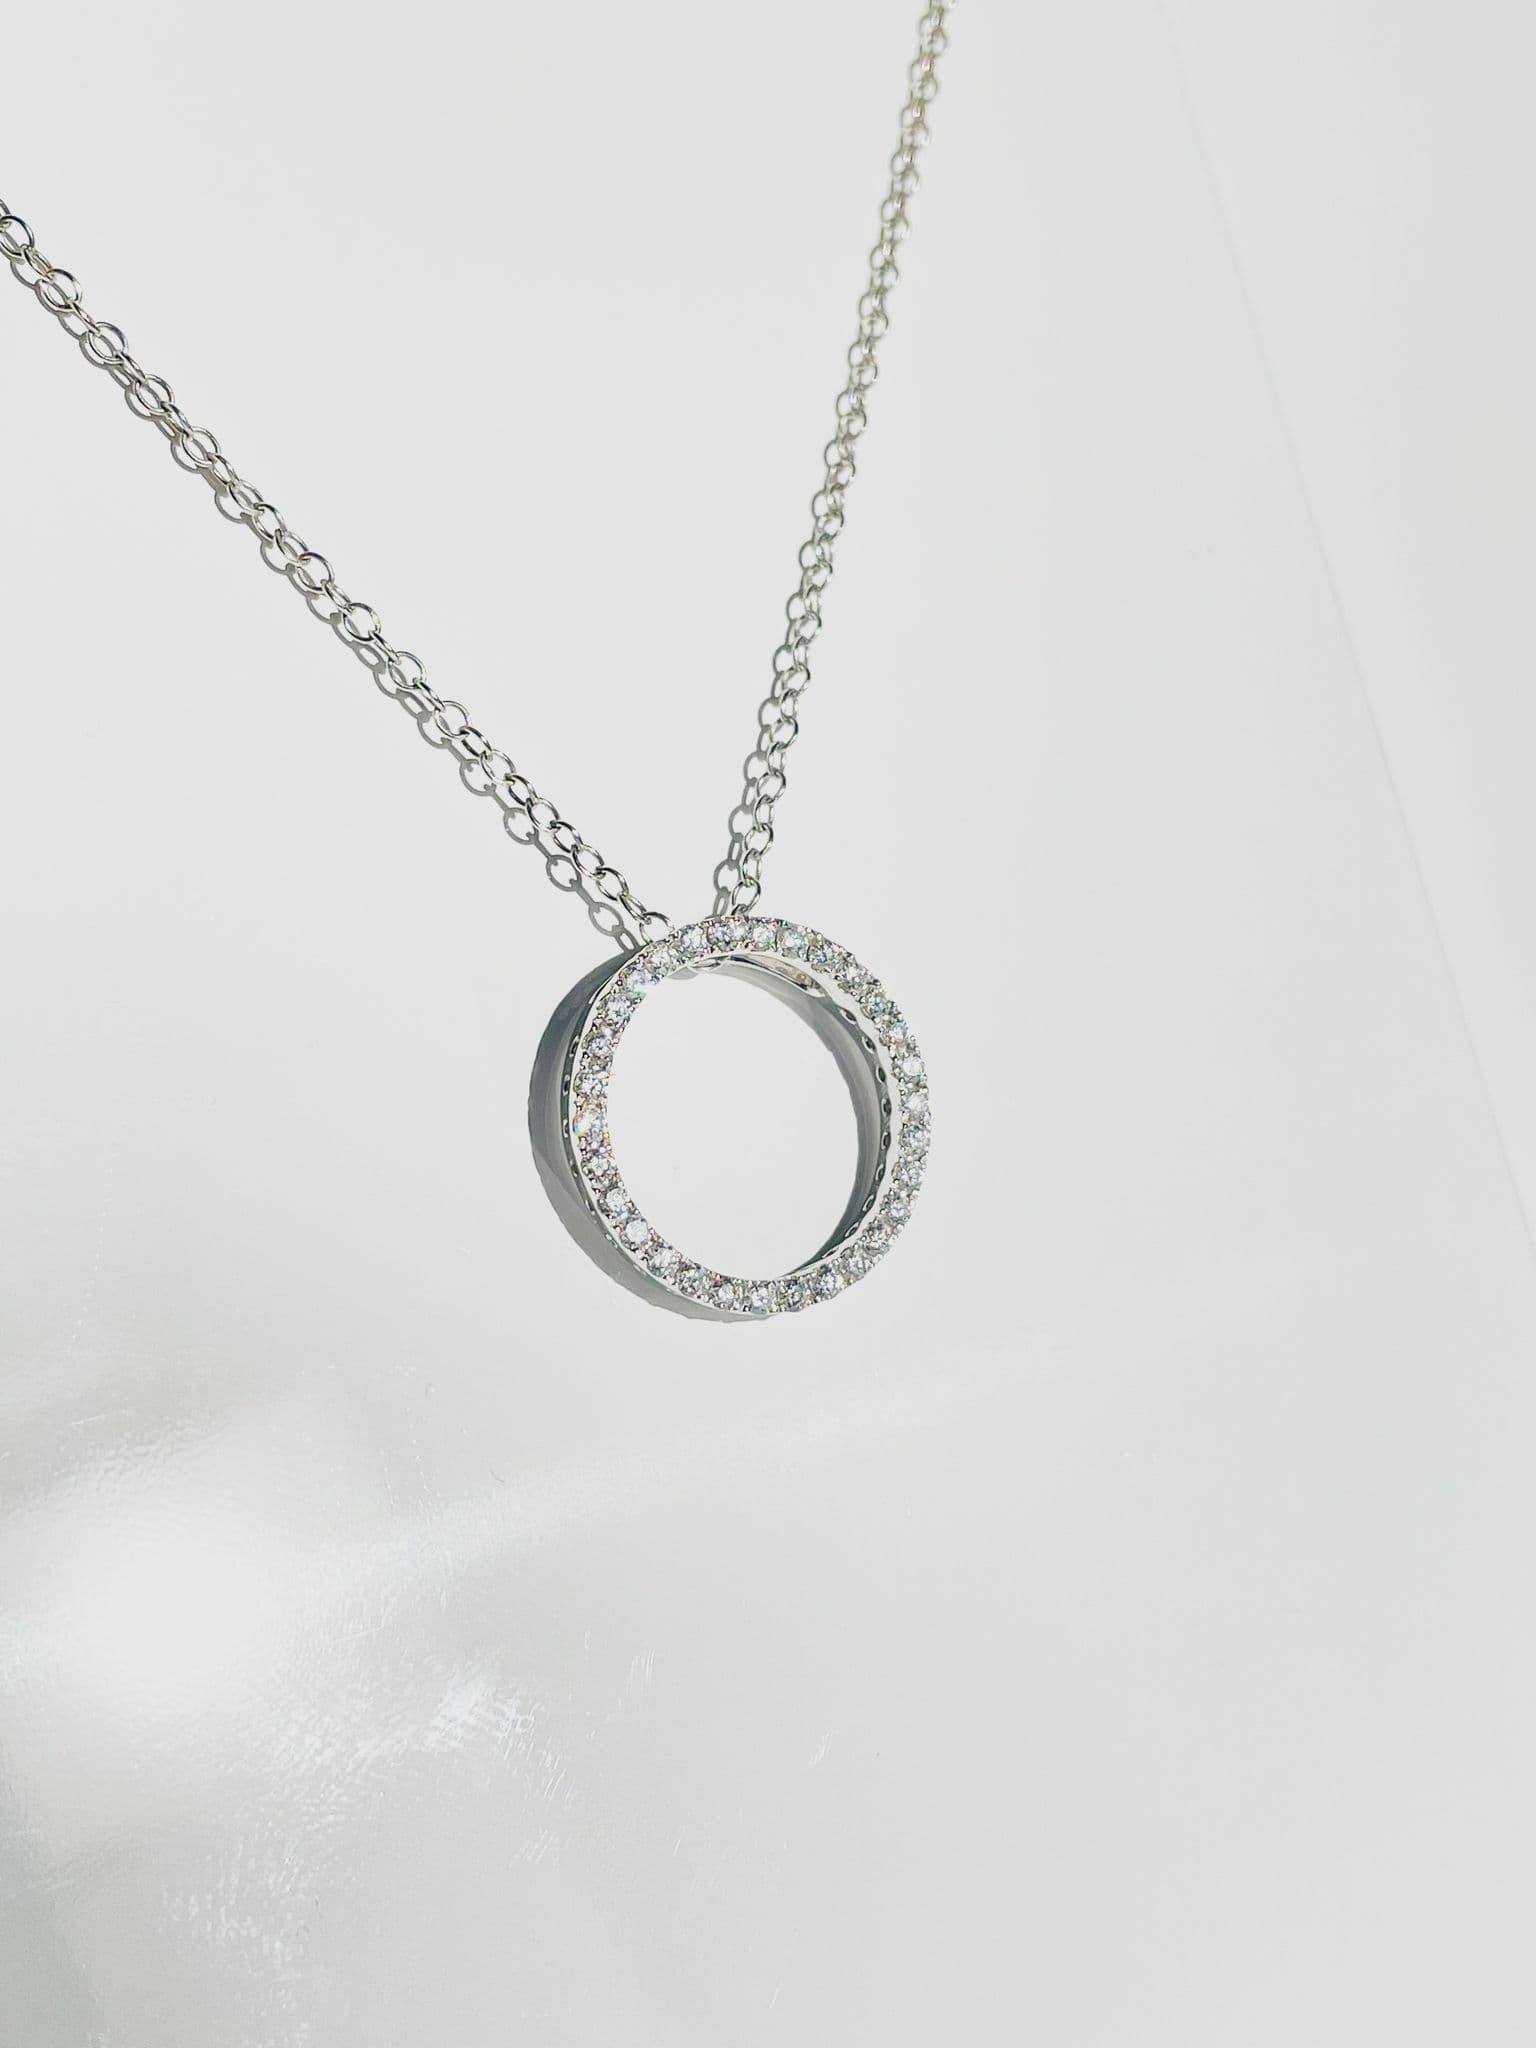 Half carat diamond round circle necklace pendant